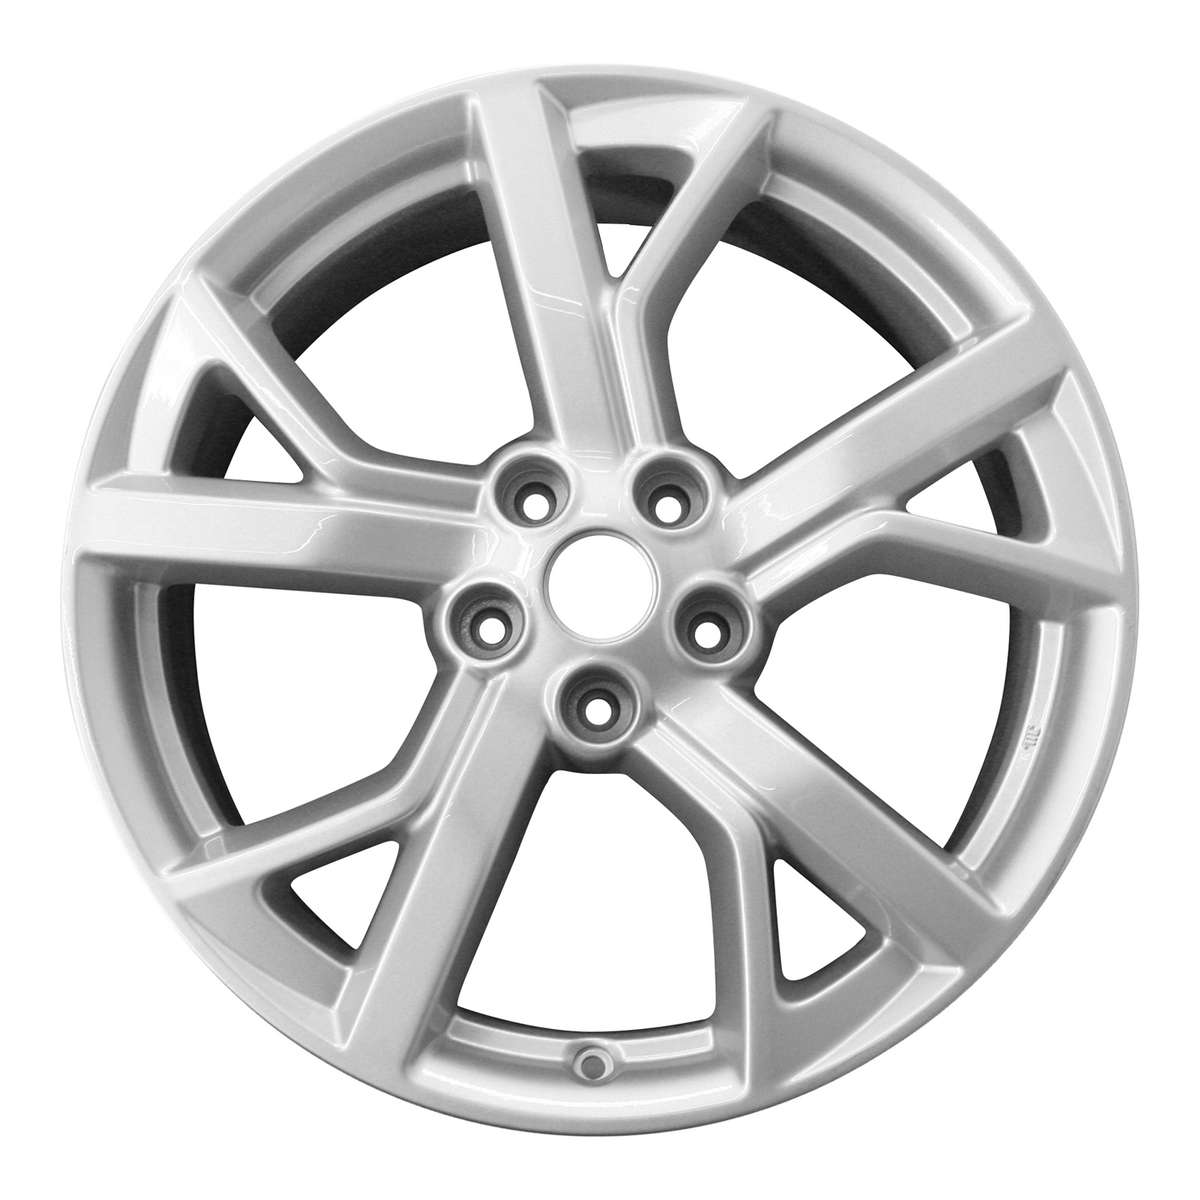 2014 Nissan Maxima New 19" Replacement Wheel Rim RW62583S